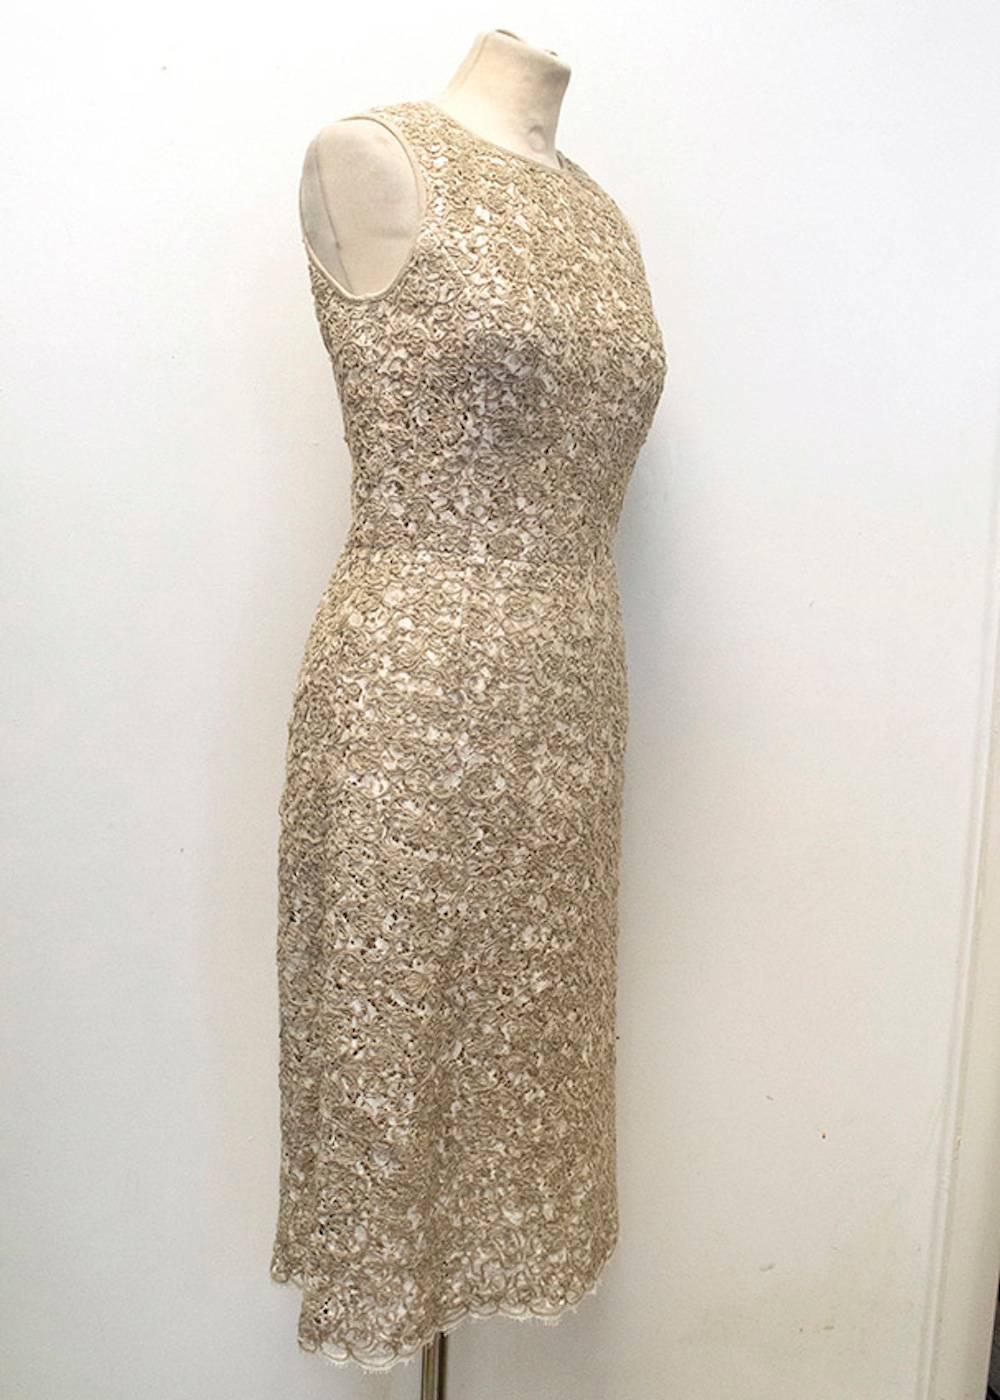 Michael Kors Textured Beige Cotton-Linen Dress For Sale 4